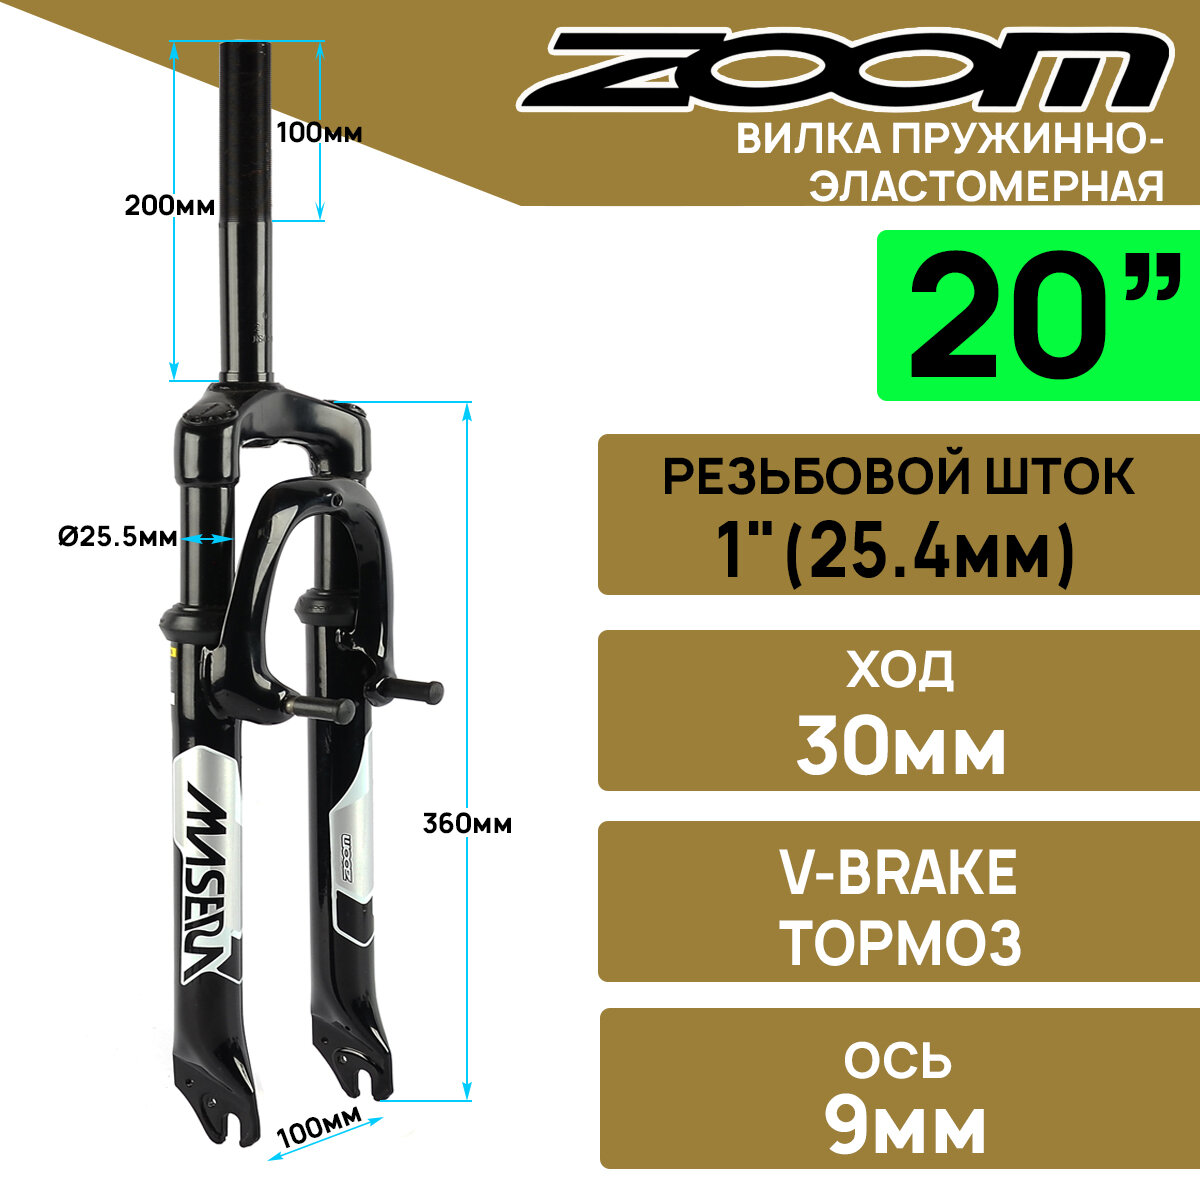 Амортизационная вилка ZOOM BRAVO-327E на 20" штырь 1", резьба 100мм, пружина+эластомер, ход 30мм, крепеж для V-brake, черная